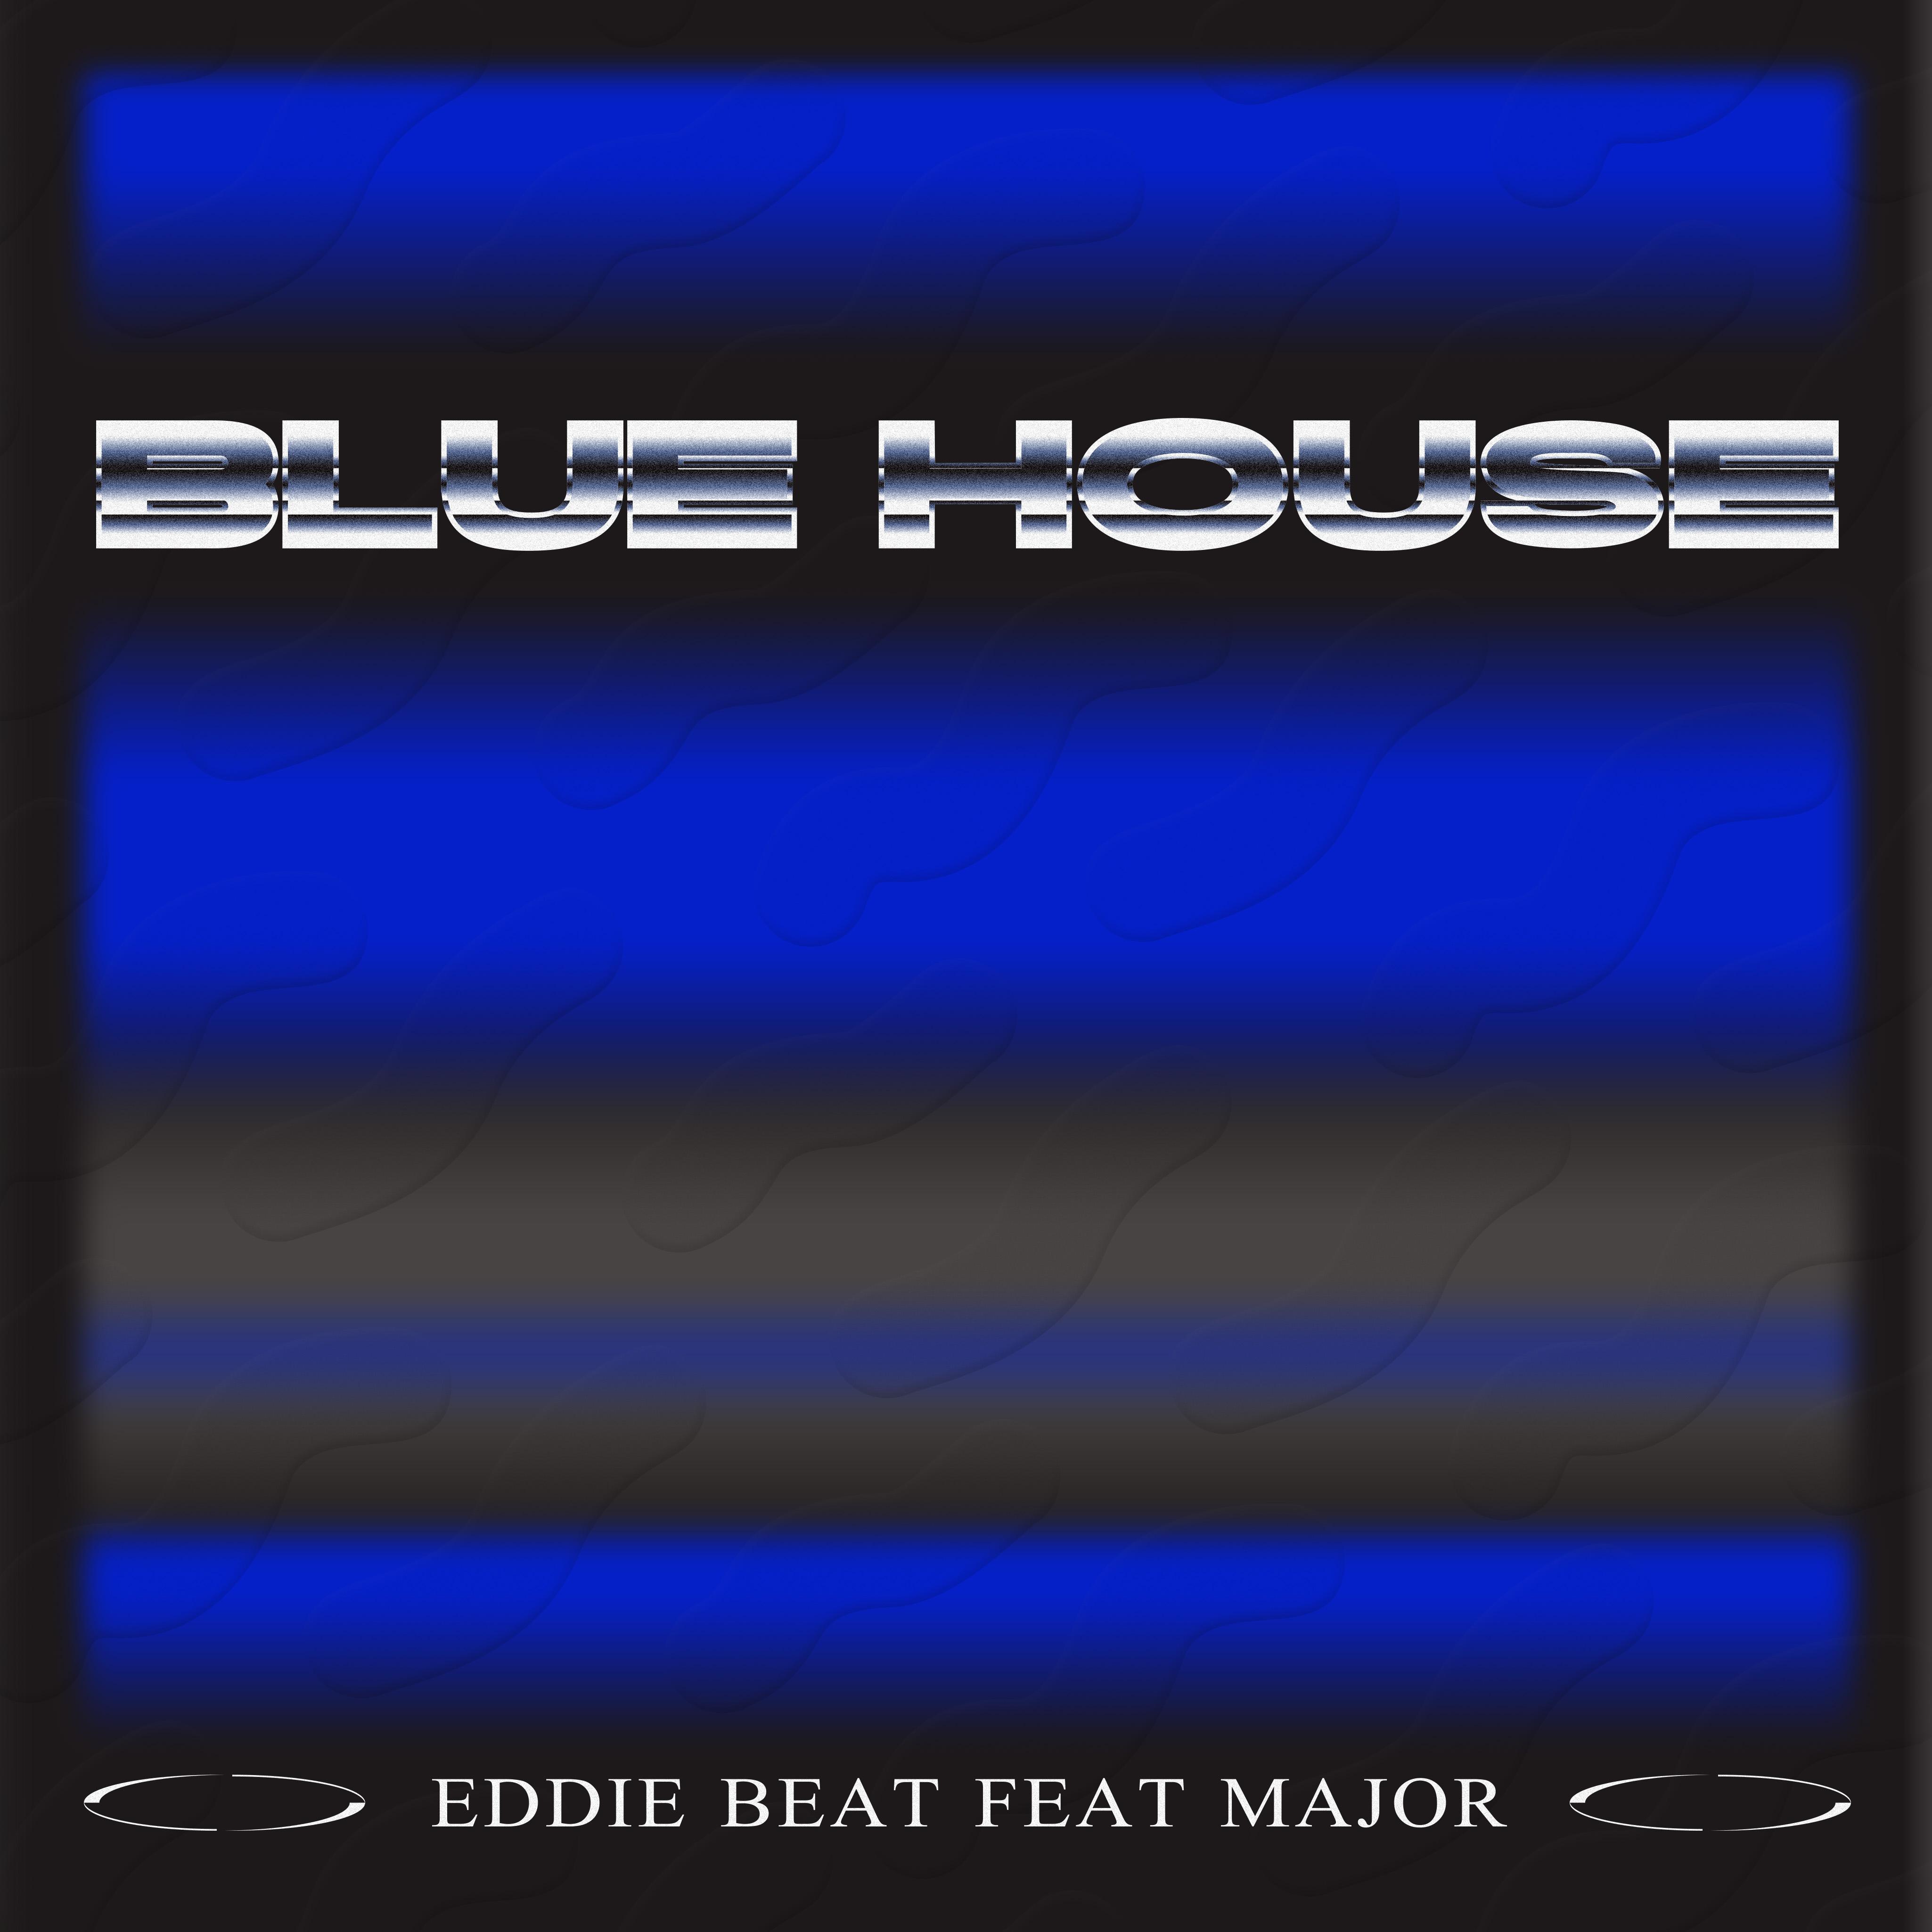 BLUE HOUSE